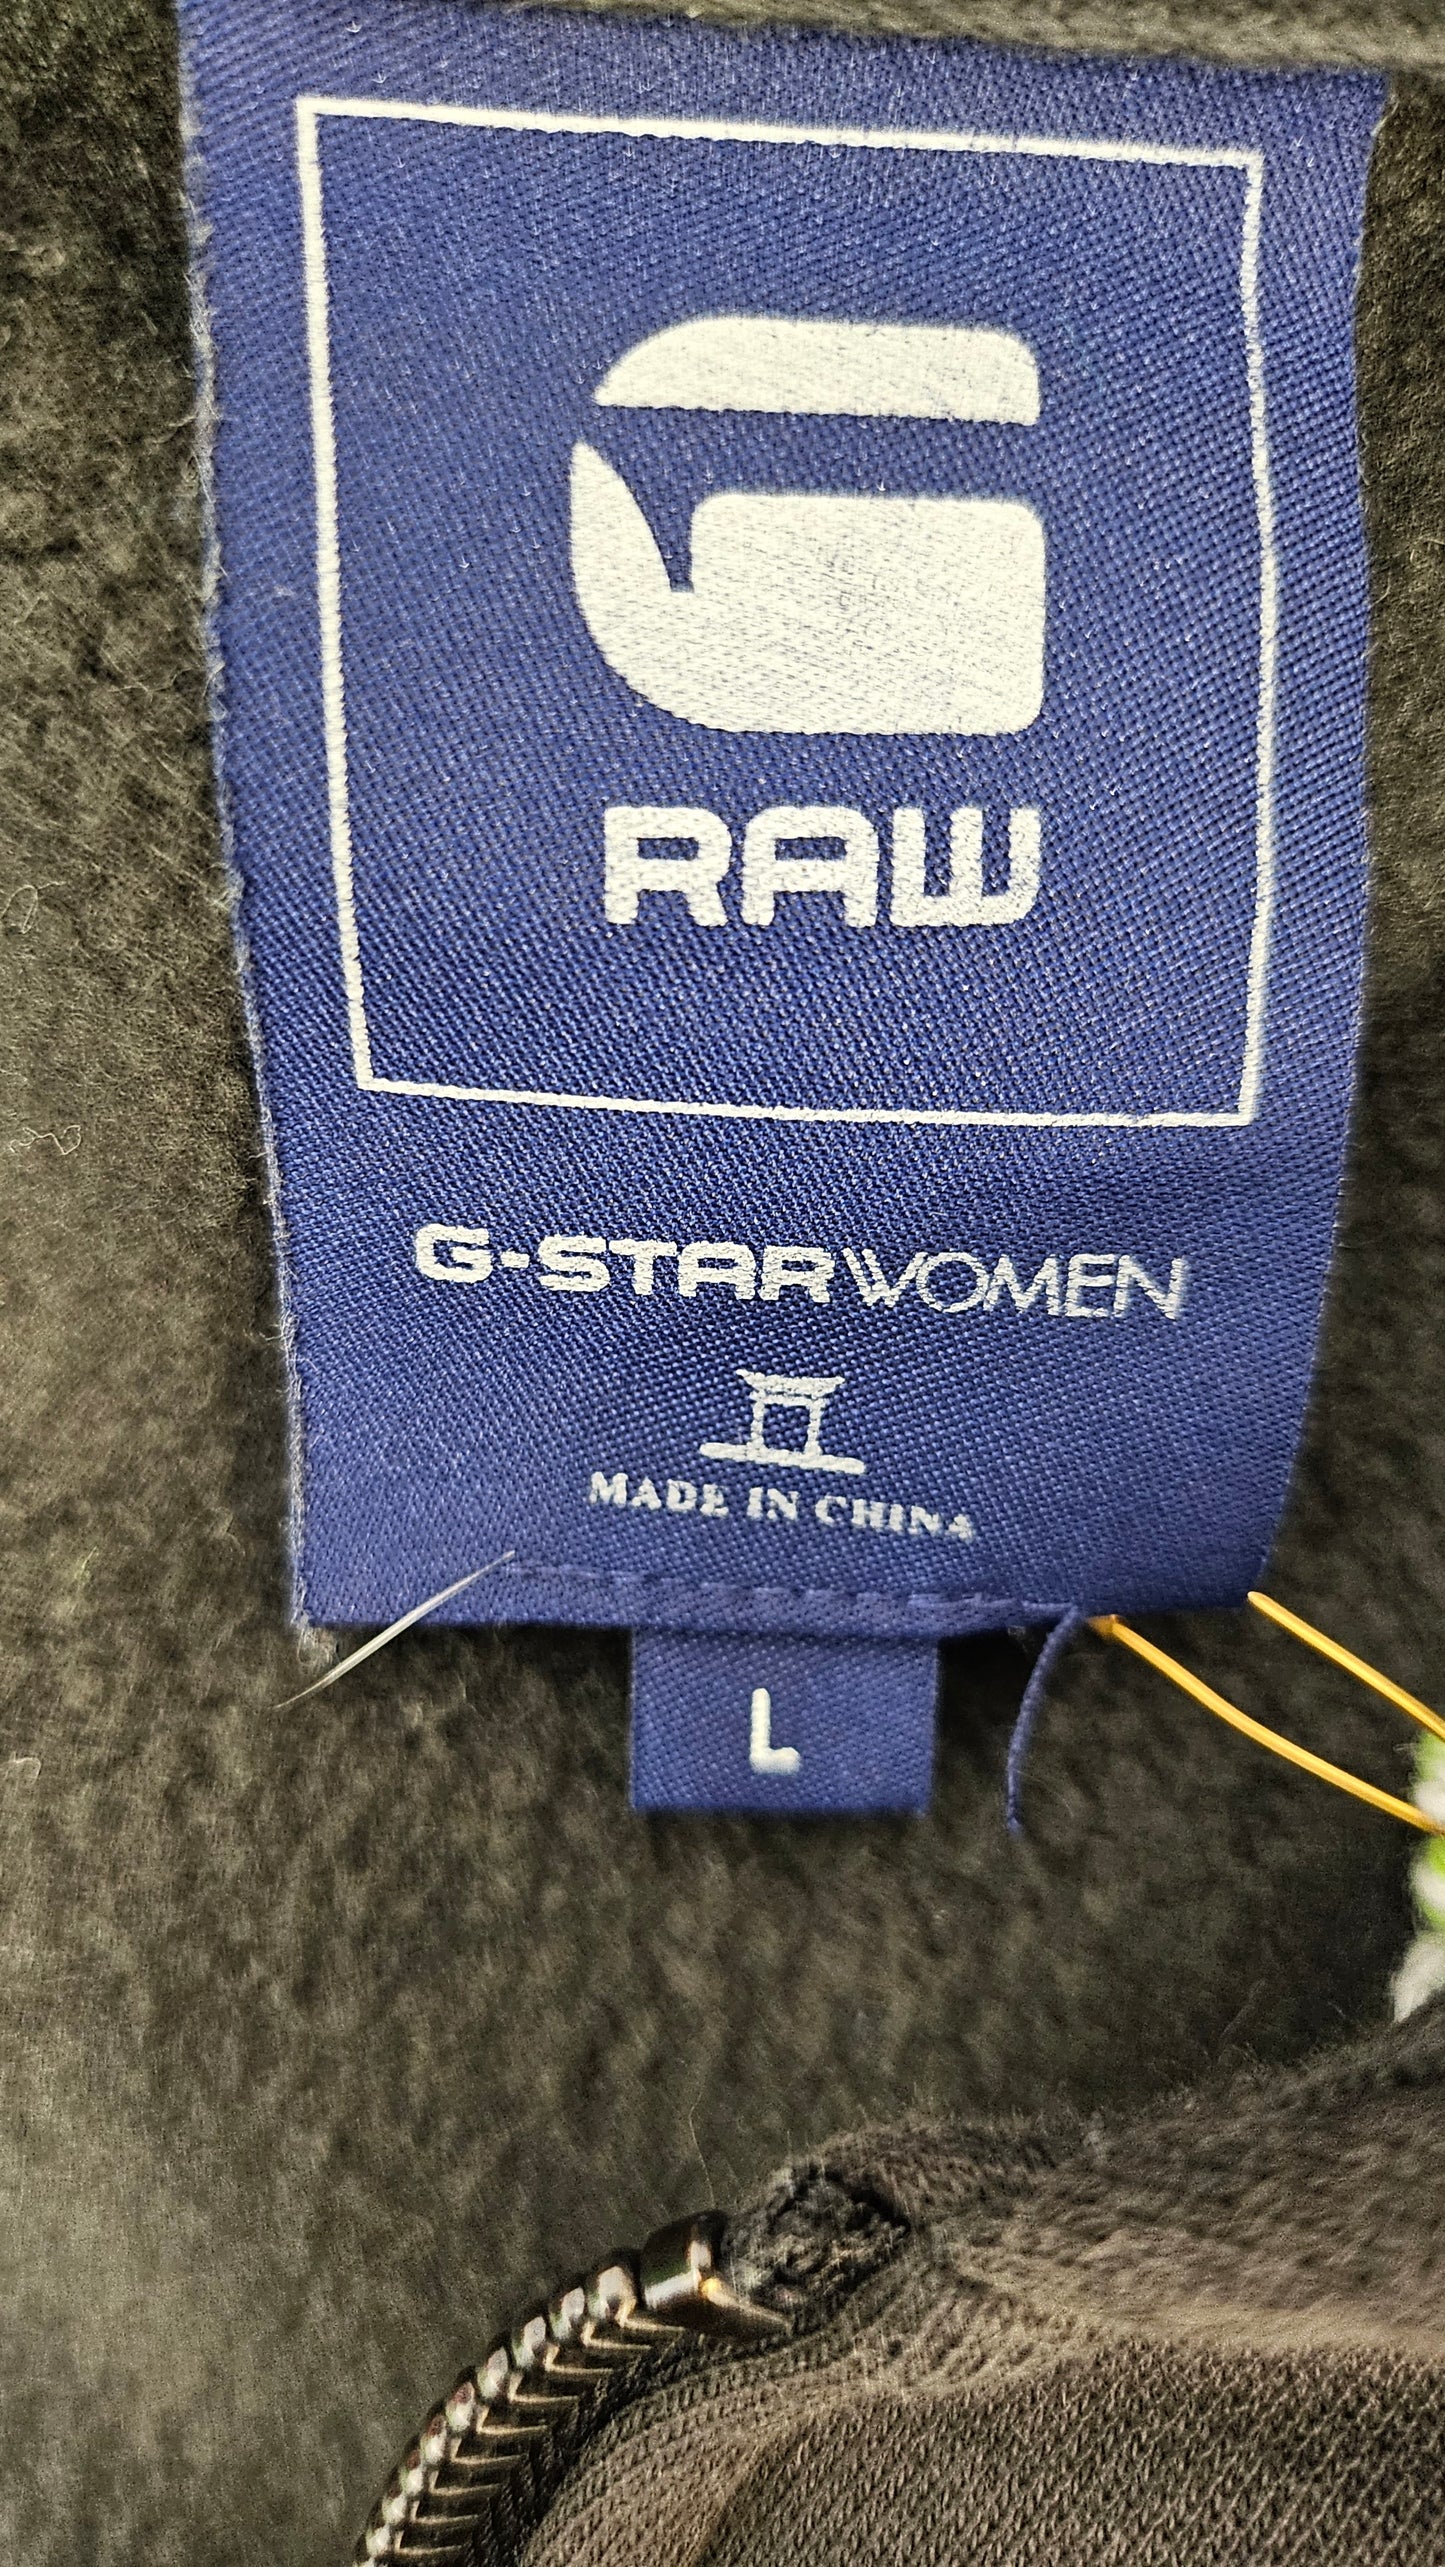 G-Star Raw Grey Hoodie Zipped Top (14)